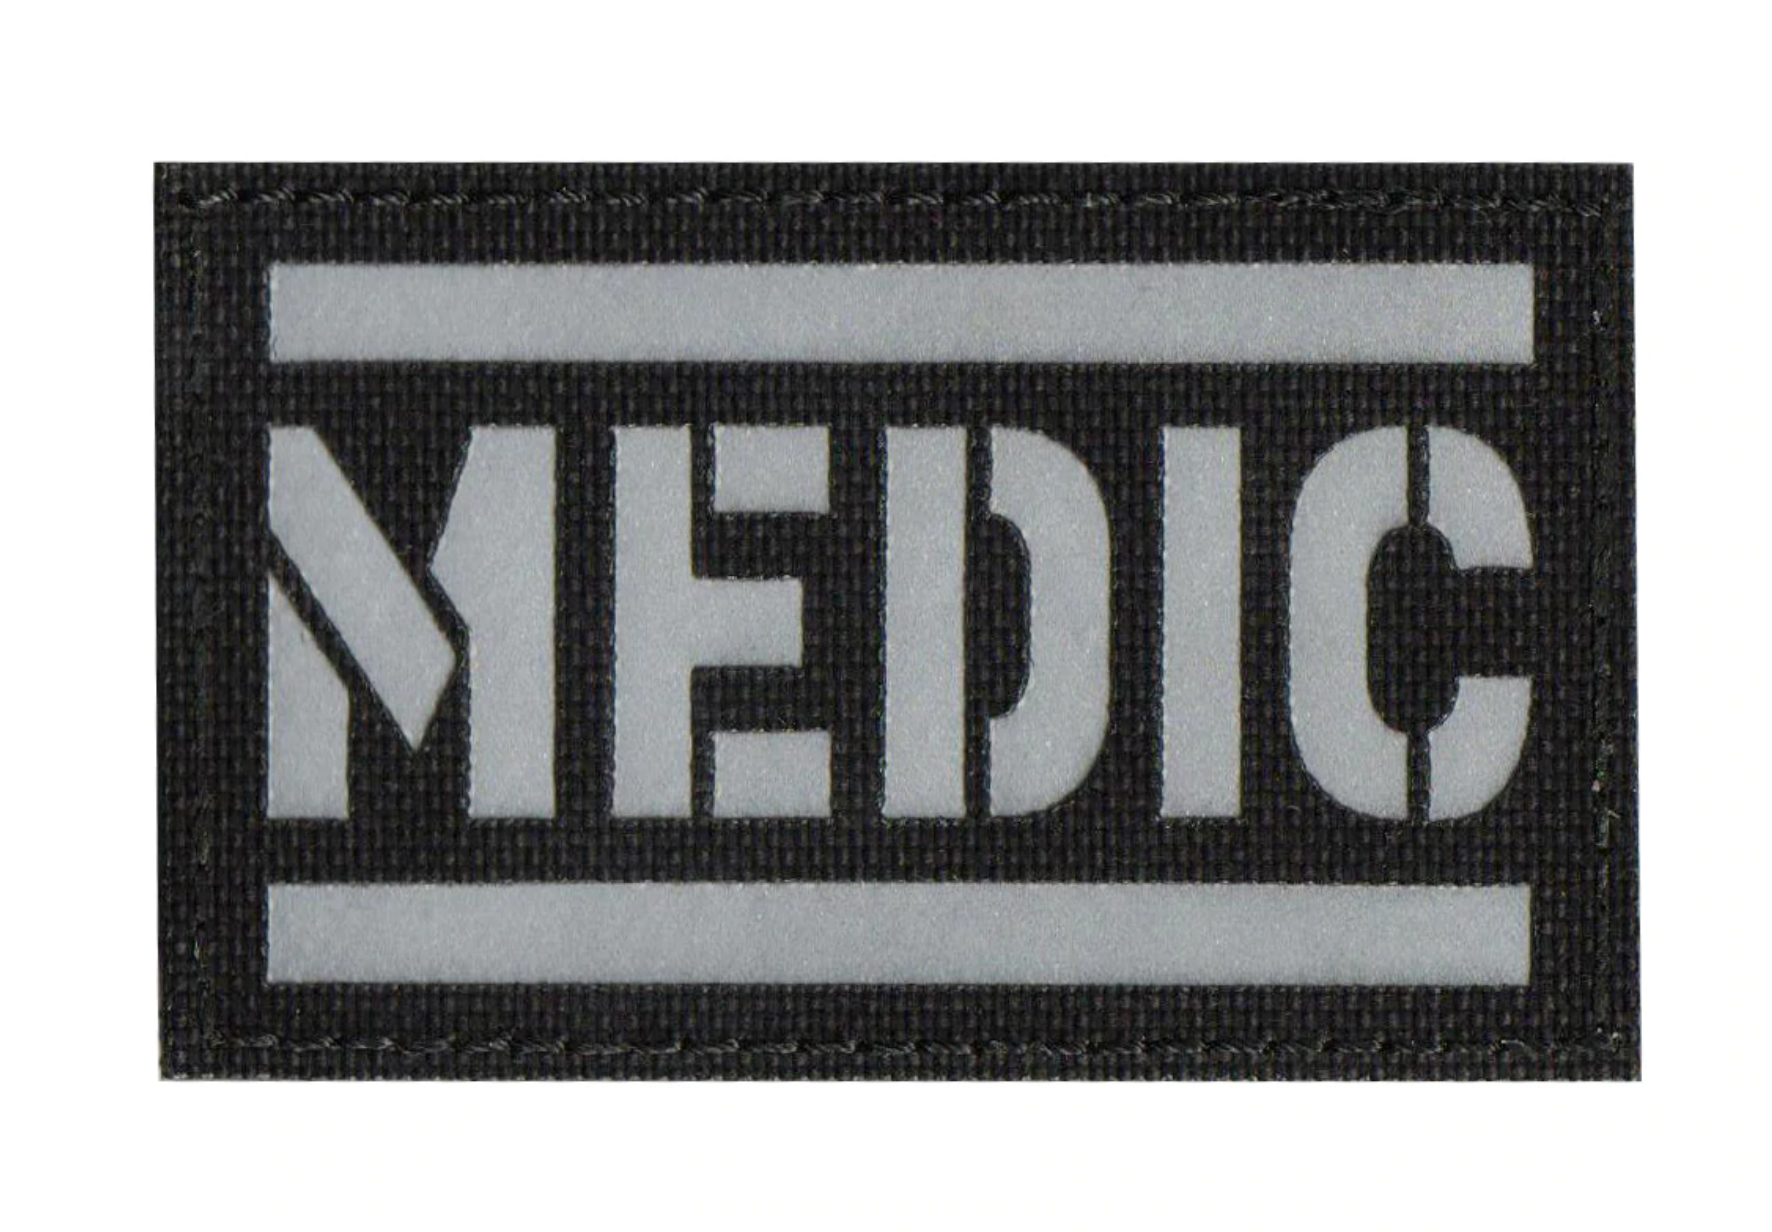 MEDIC reflective Velcro Patch: Black & White